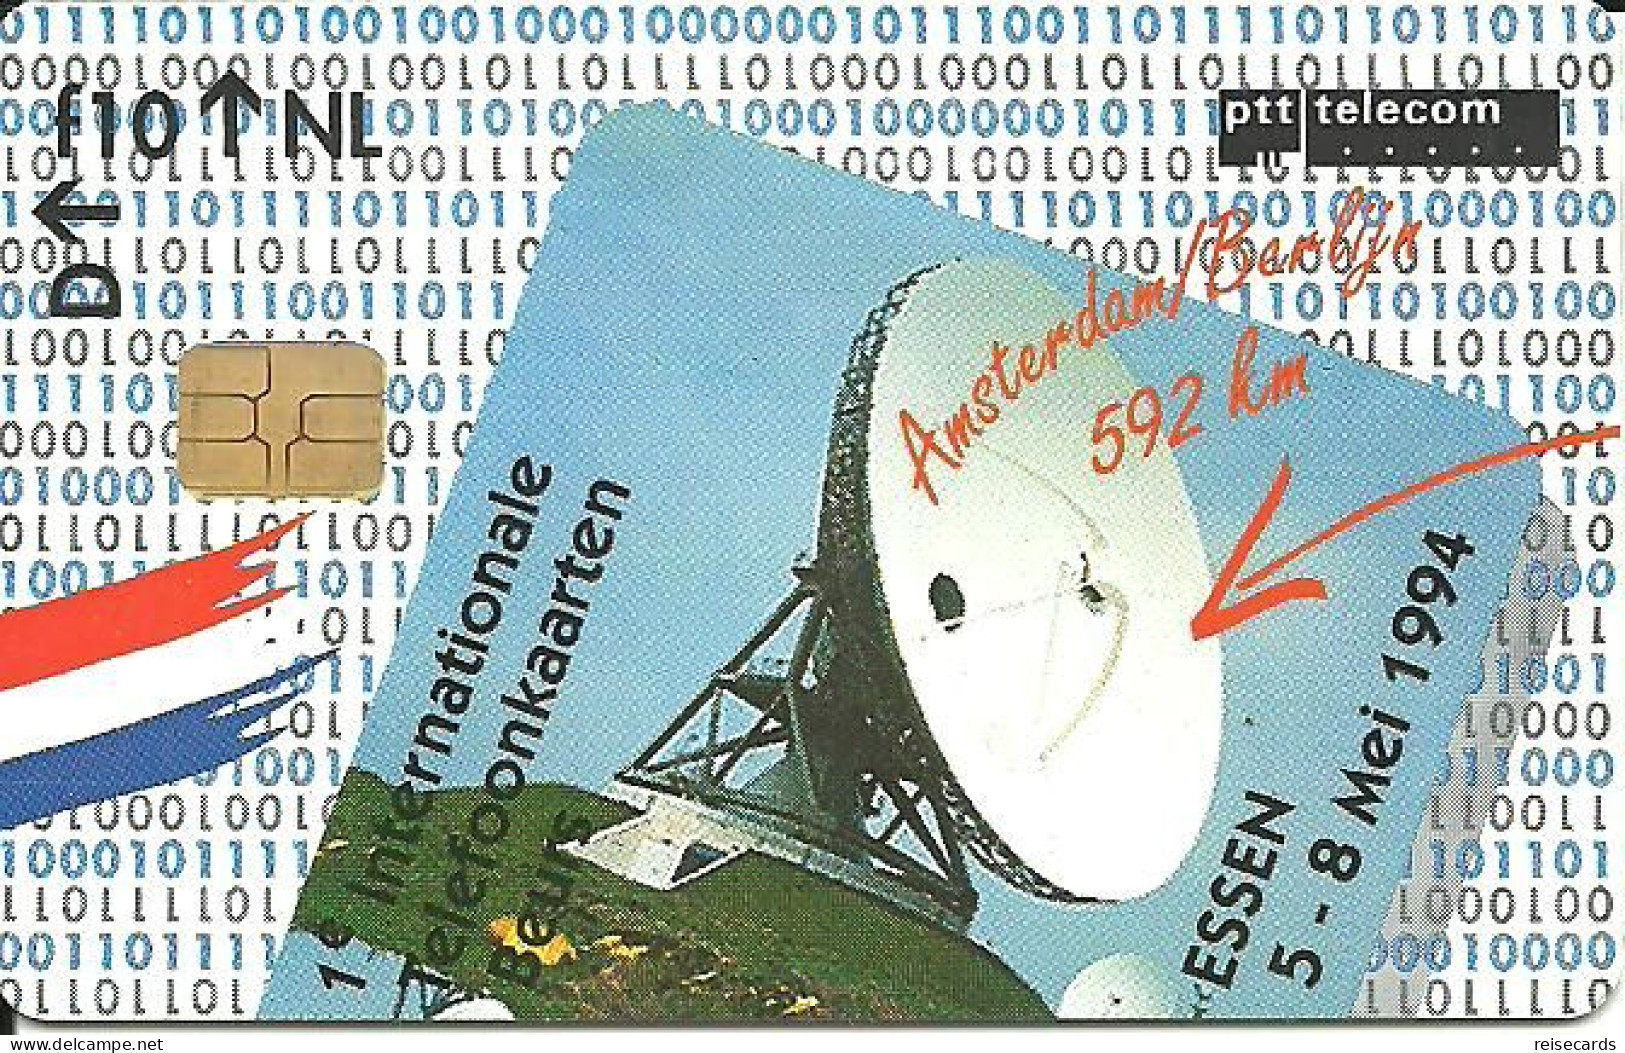 Netherlands: Ptt Telecom - 1994 1. Internationale Telefoonkaarten Beurs 94 Essen. Mint - Public